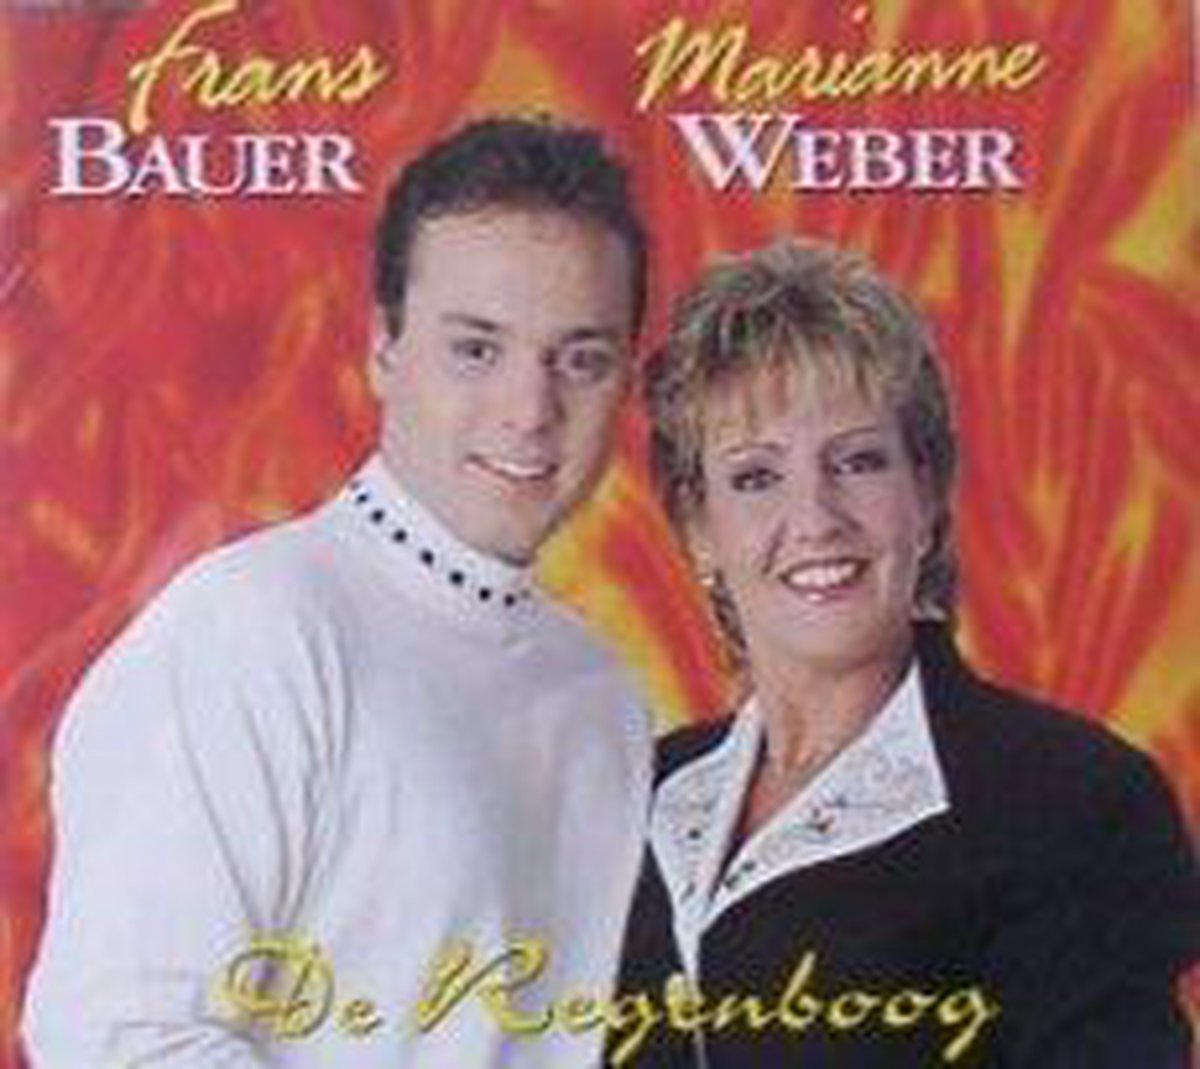 De Regenboog - Frans Bauer & Marianne Weber